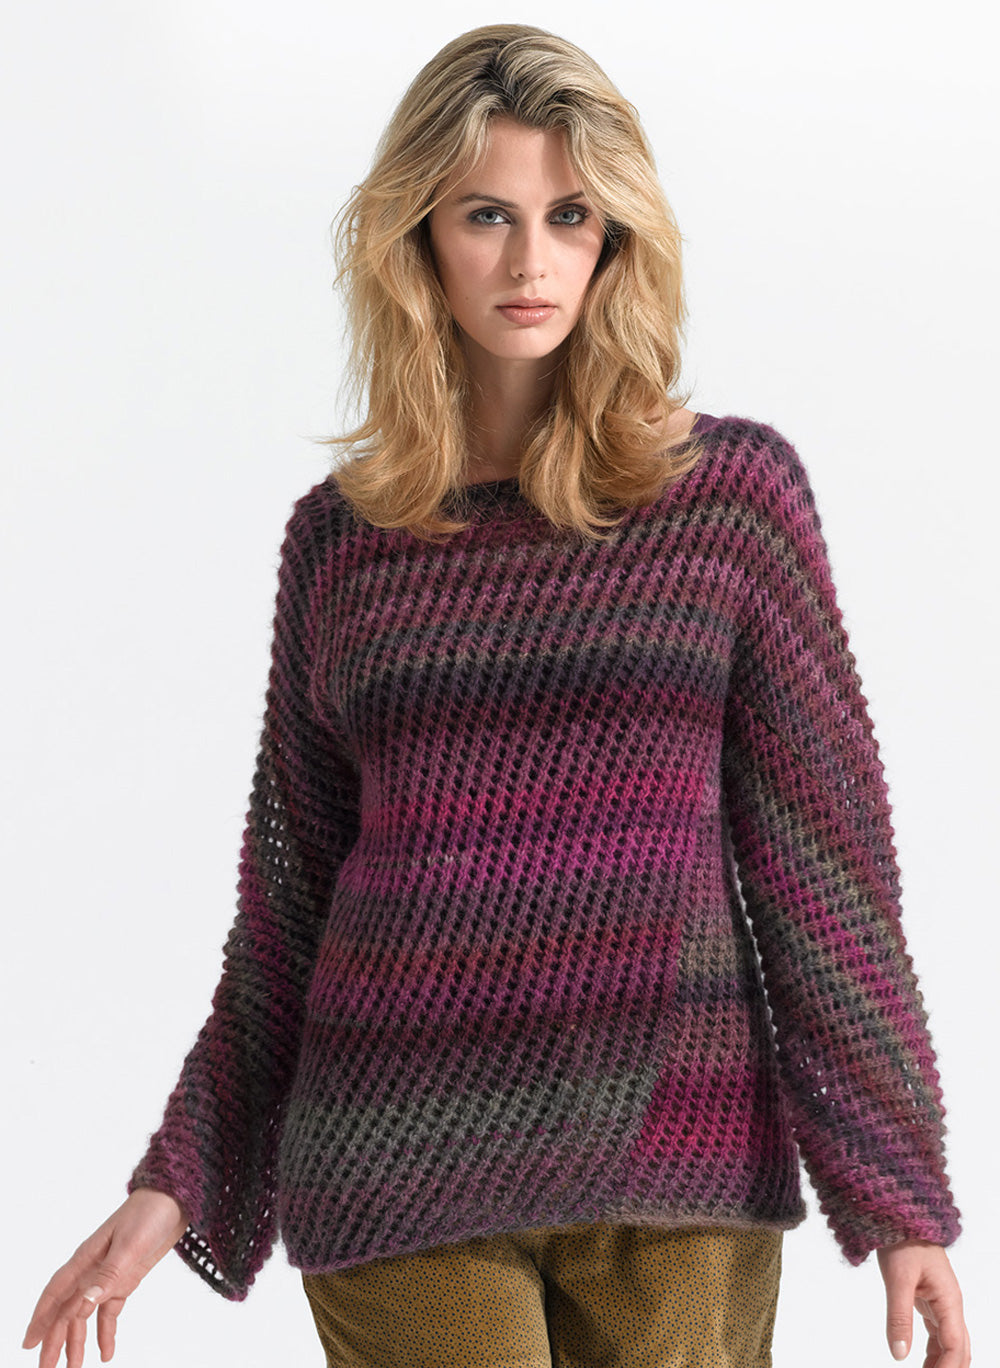 Diagonal Lace Pullover Pattern (Knit) – Lion Brand Yarn